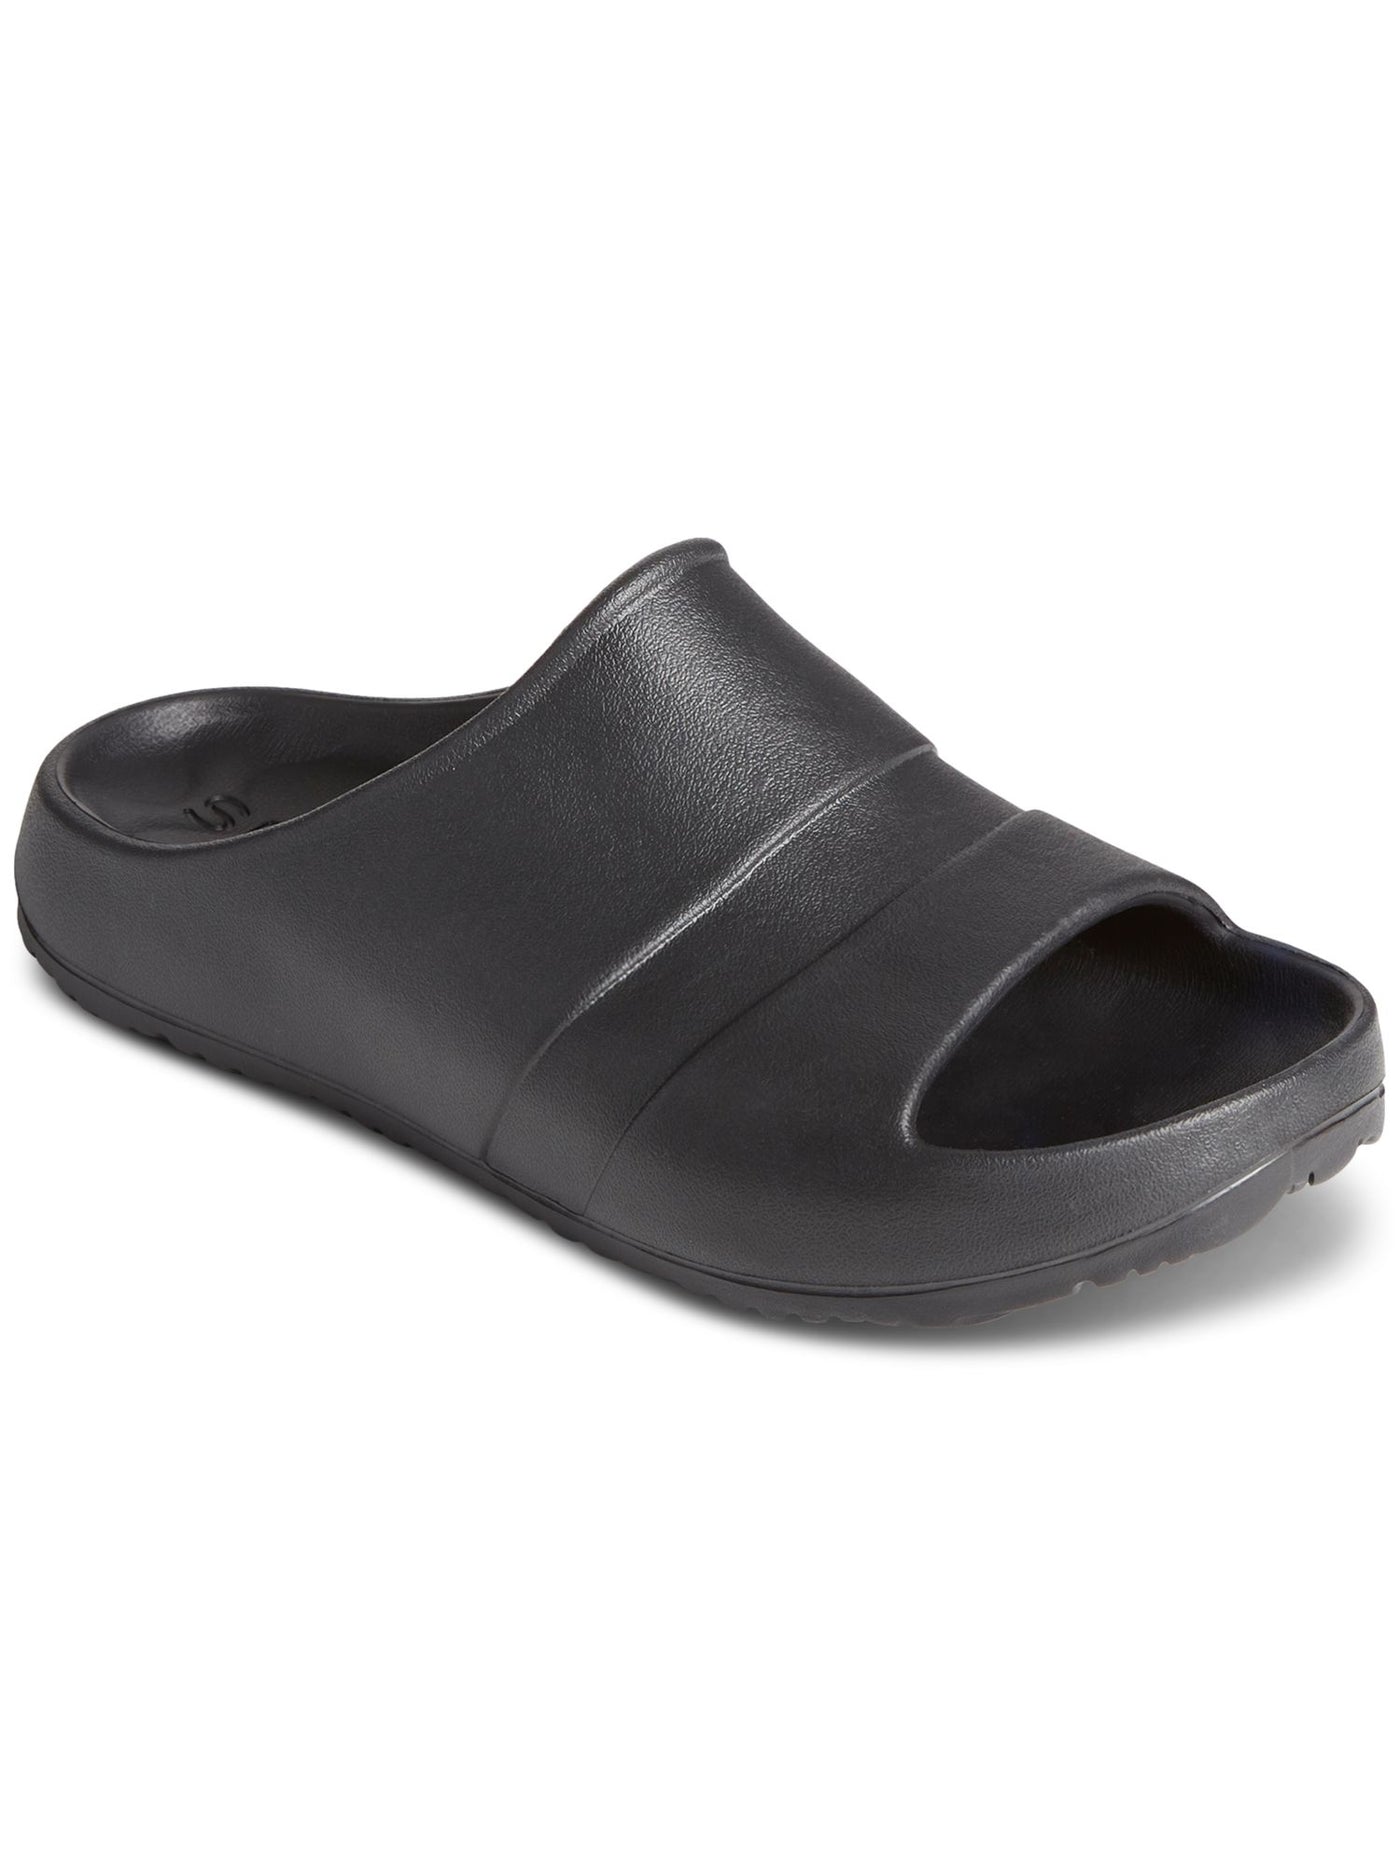 SPERRY Mens Black Padded Float Round Toe Slip On Slide Sandals Shoes 8